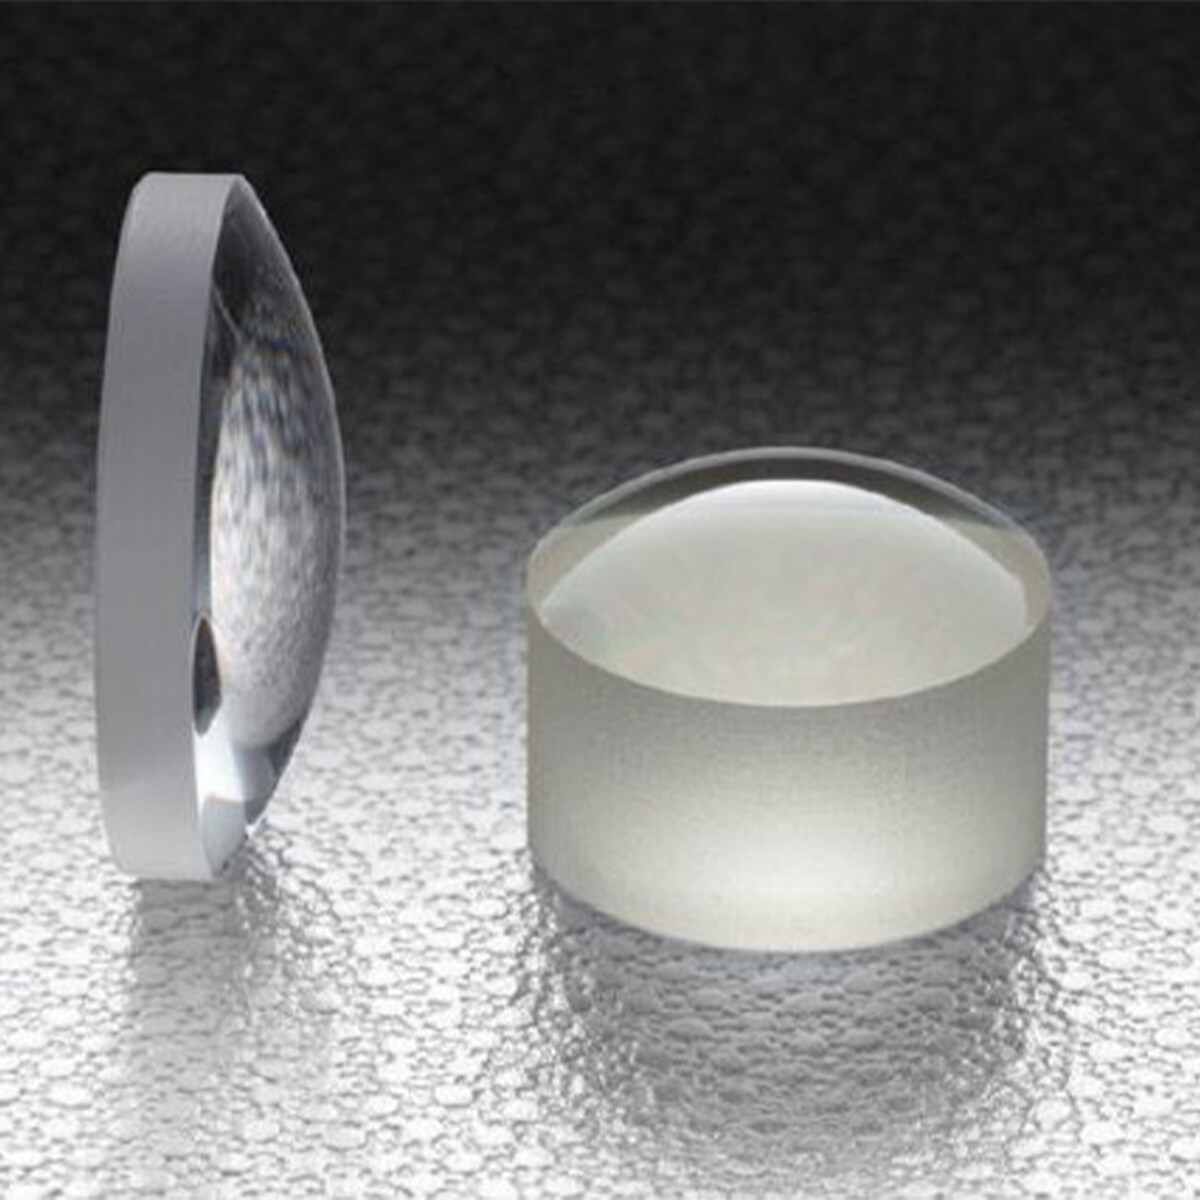 plano convex glass lens, plano convex lens silvered, lens wholesale distributors